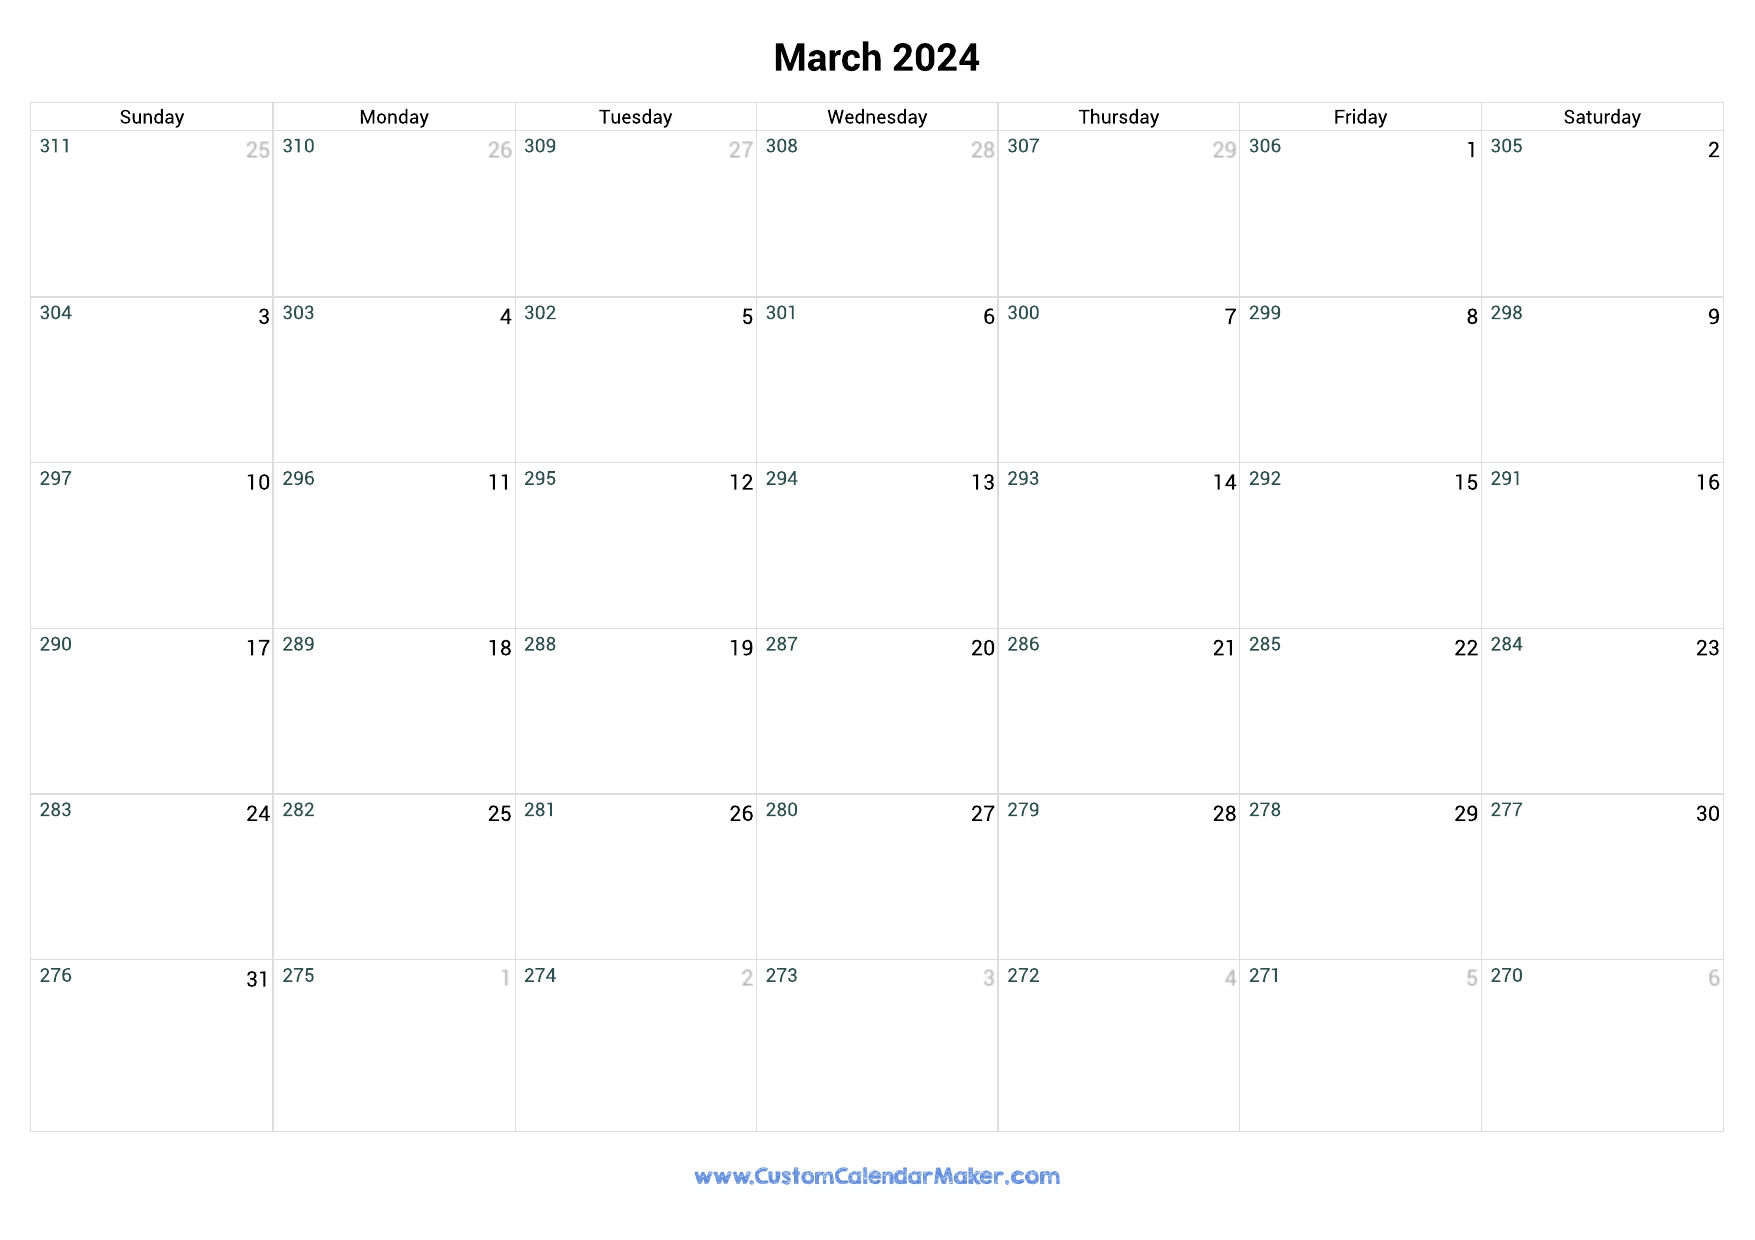 March 2024 Remaining Days Calendar